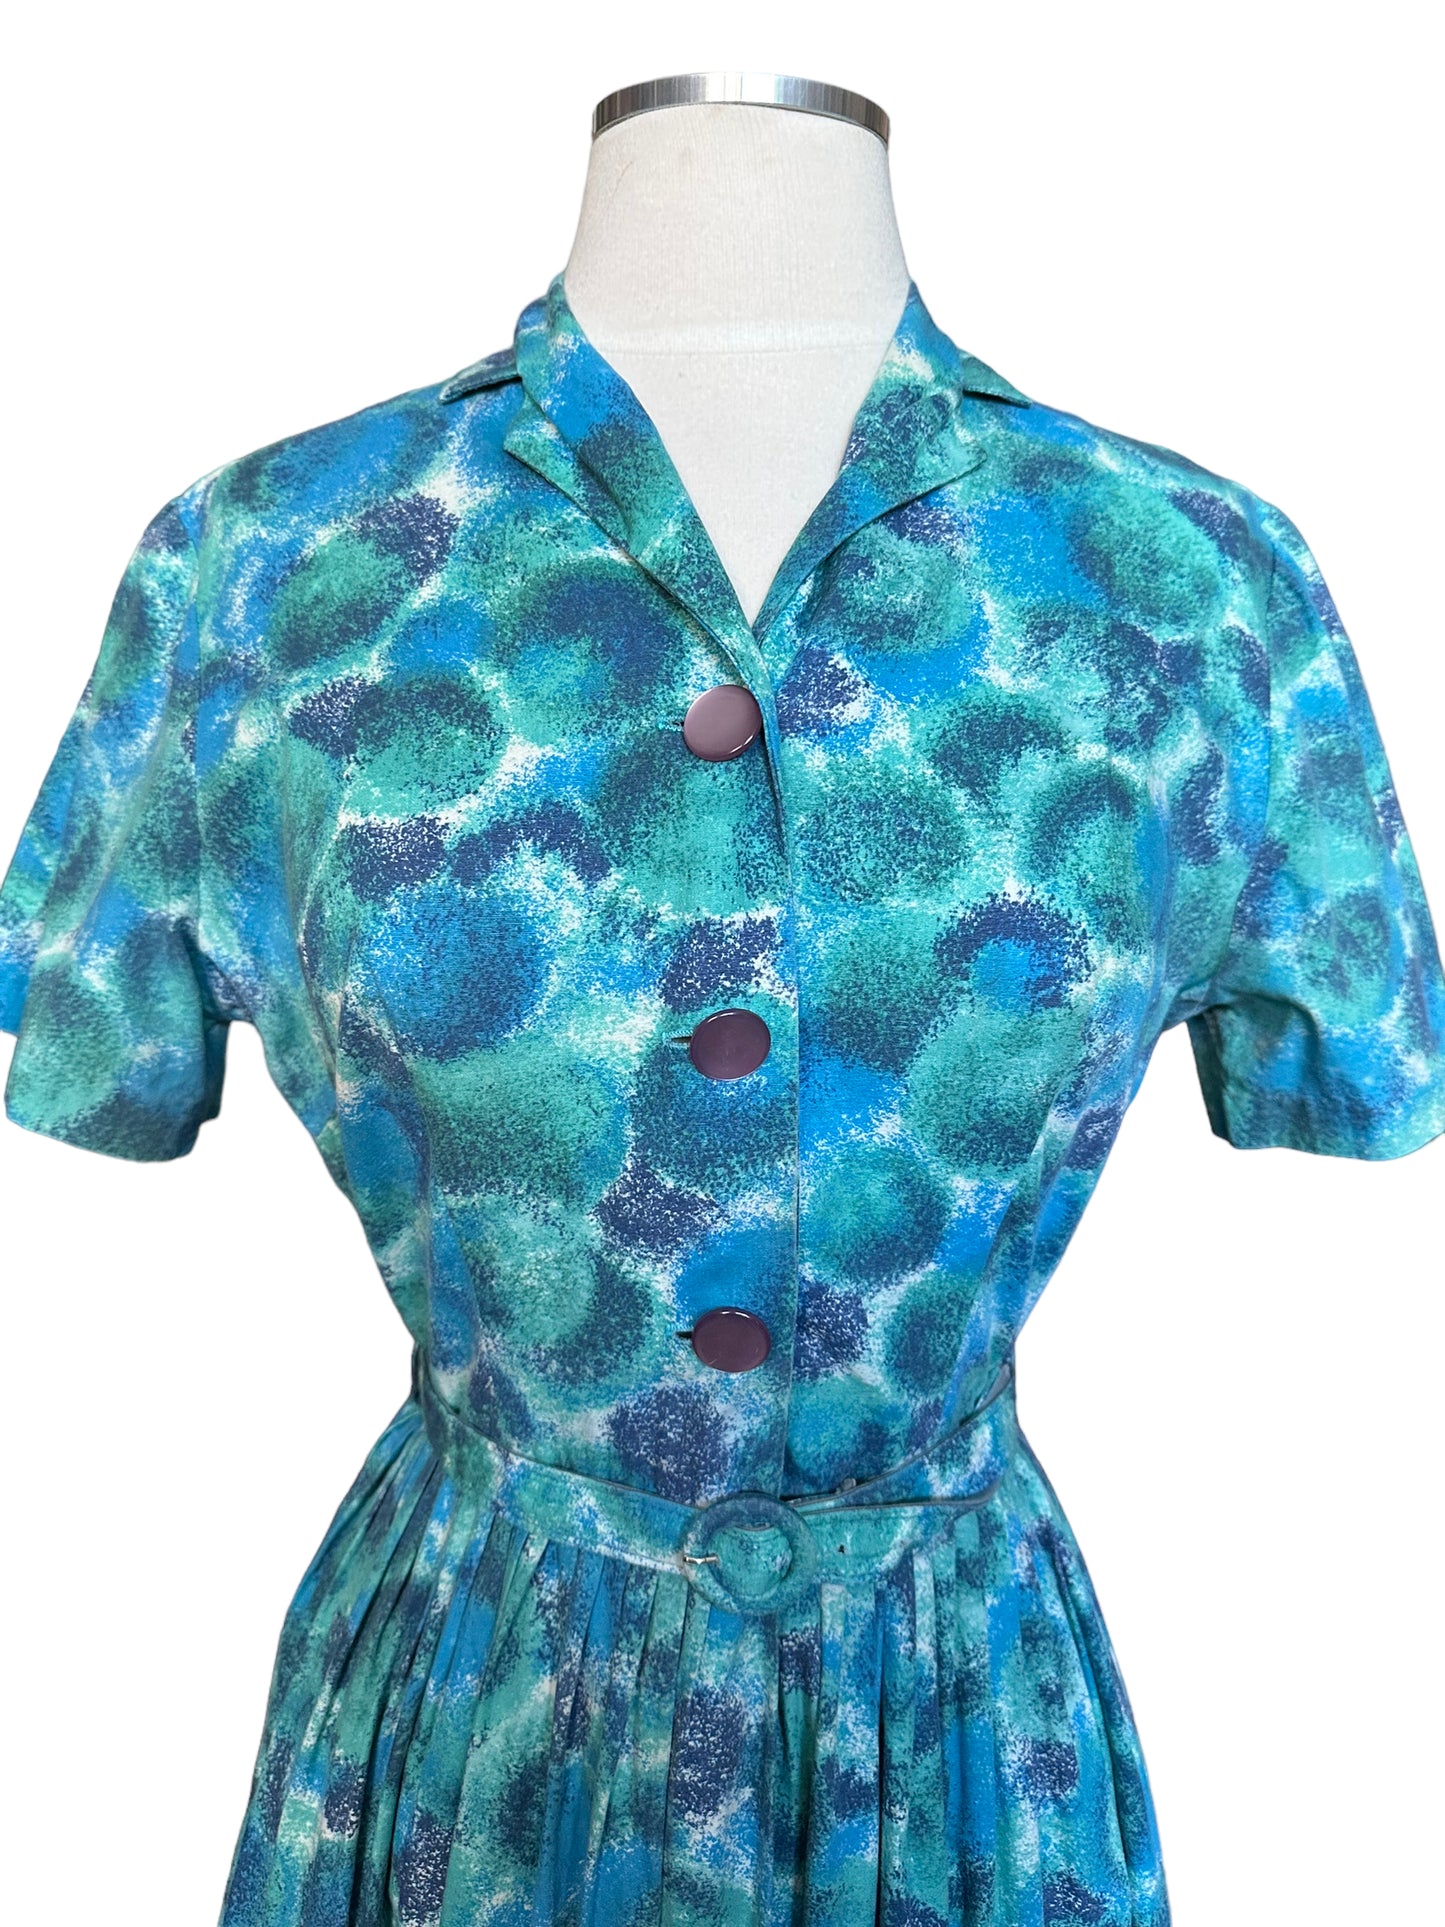 Front bust view of Vintage 1950s Button Up Dress With Belt | True Vintage Dresses | Barn Owl Vintage Seattle